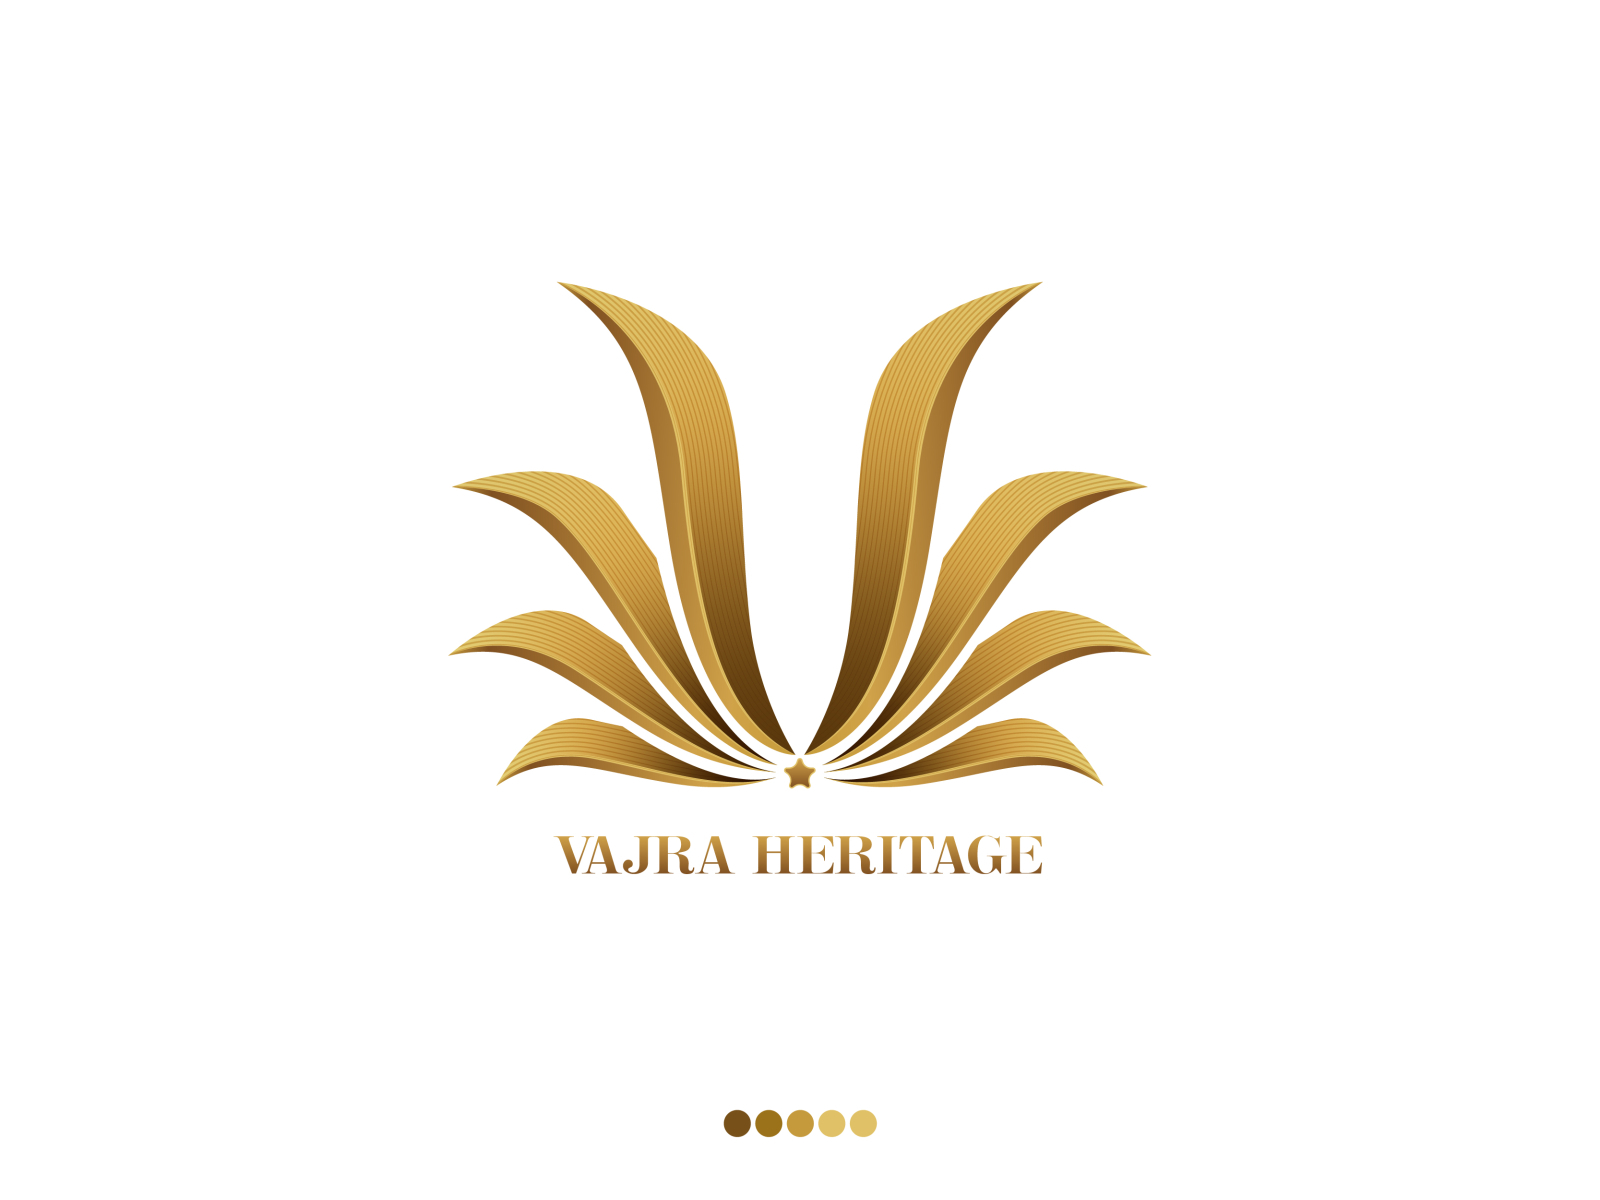 Heritage Logo | Logo Design Gallery Inspiration | LogoMix